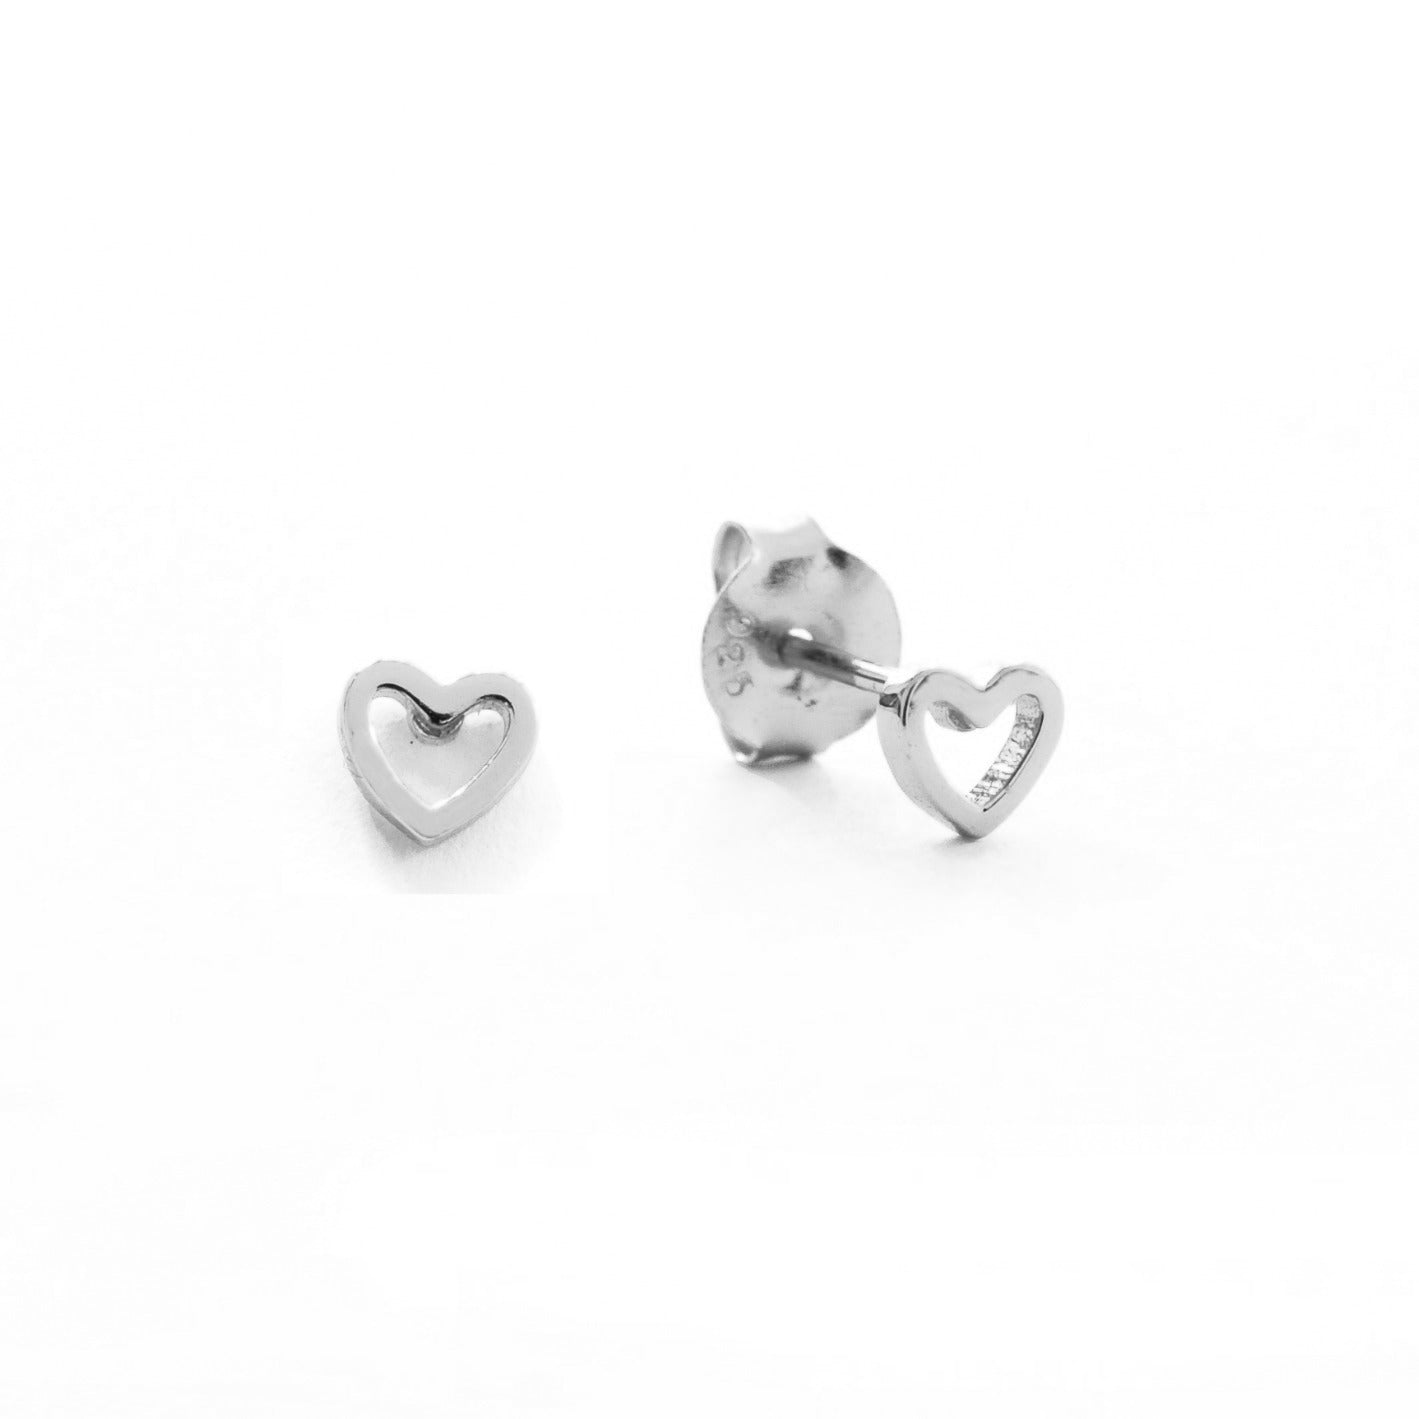 Heart silhouette silver - ByMirelae